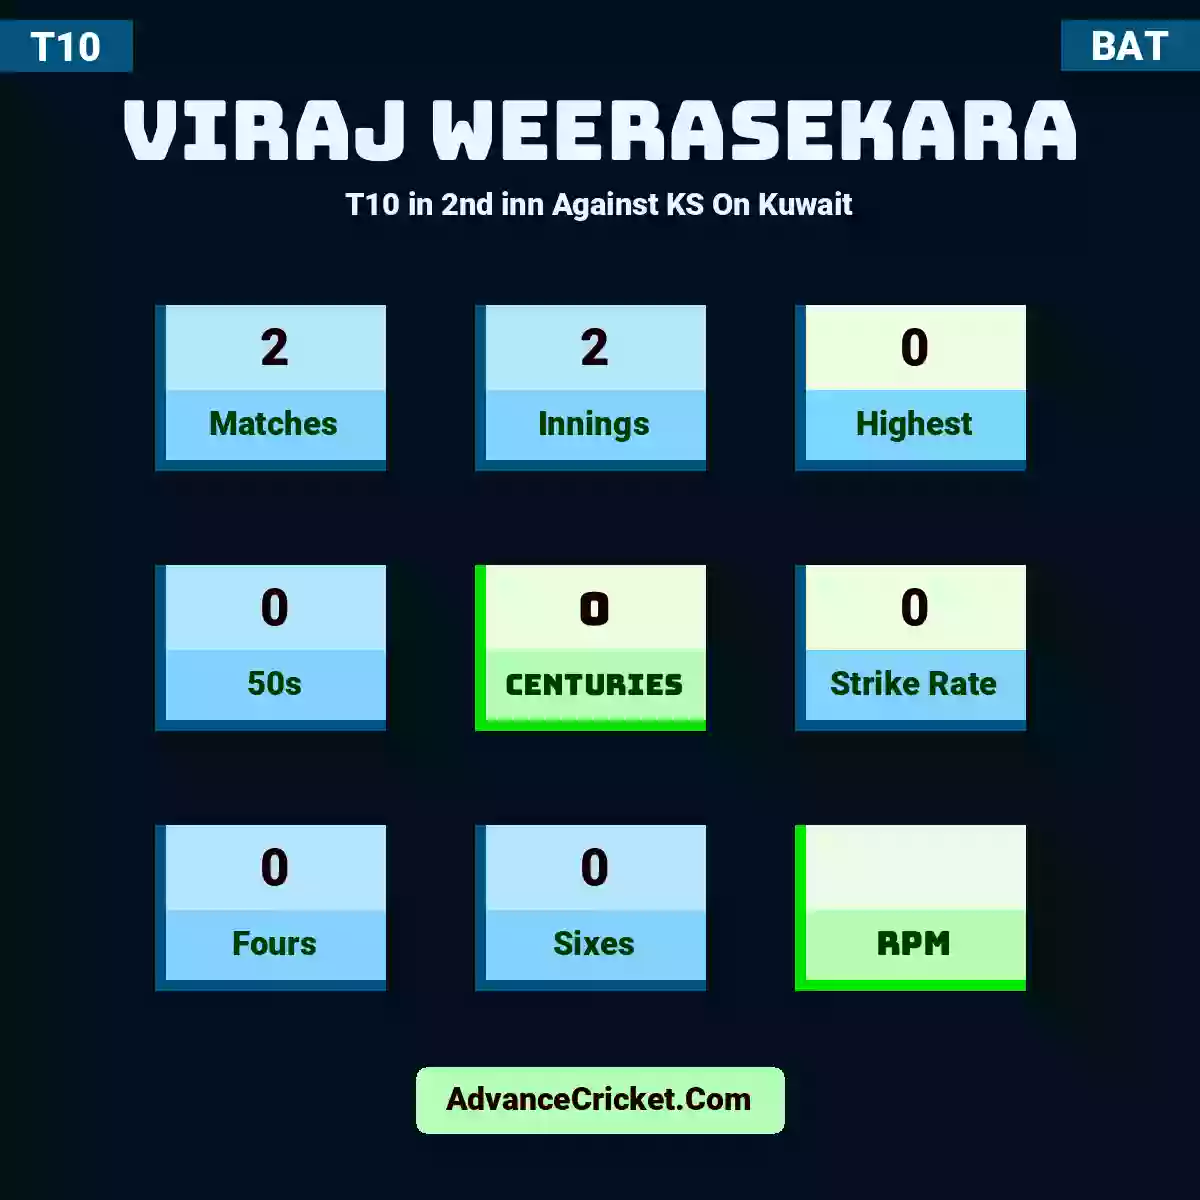 Viraj Weerasekara T10  in 2nd inn Against KS On Kuwait, Viraj Weerasekara played 2 matches, scored 0 runs as highest, 0 half-centuries, and 0 centuries, with a strike rate of 0. V.Weerasekara hit 0 fours and 0 sixes.